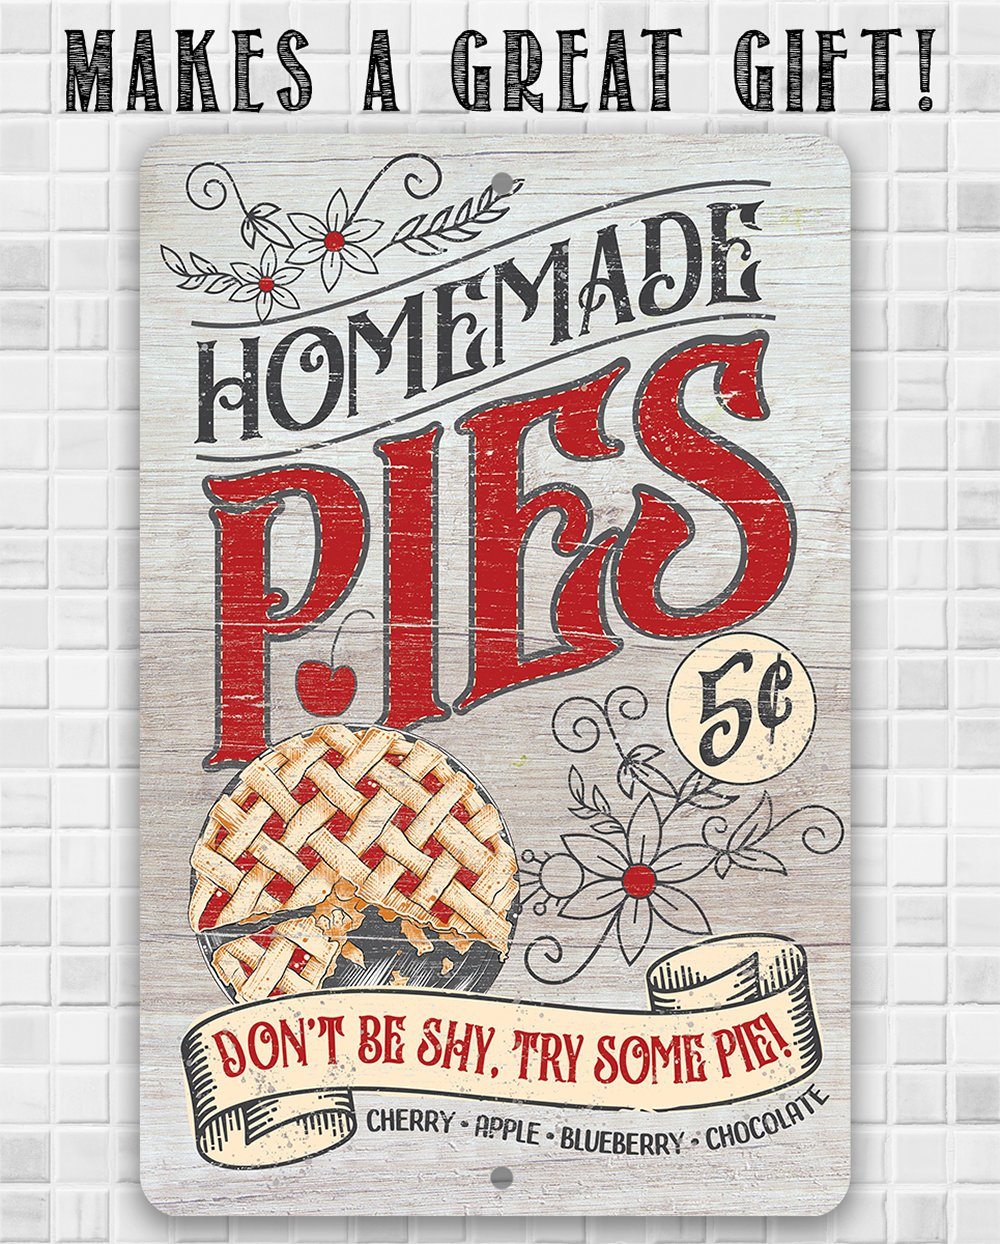 Homemade Pies - Metal Sign | Lone Star Art.